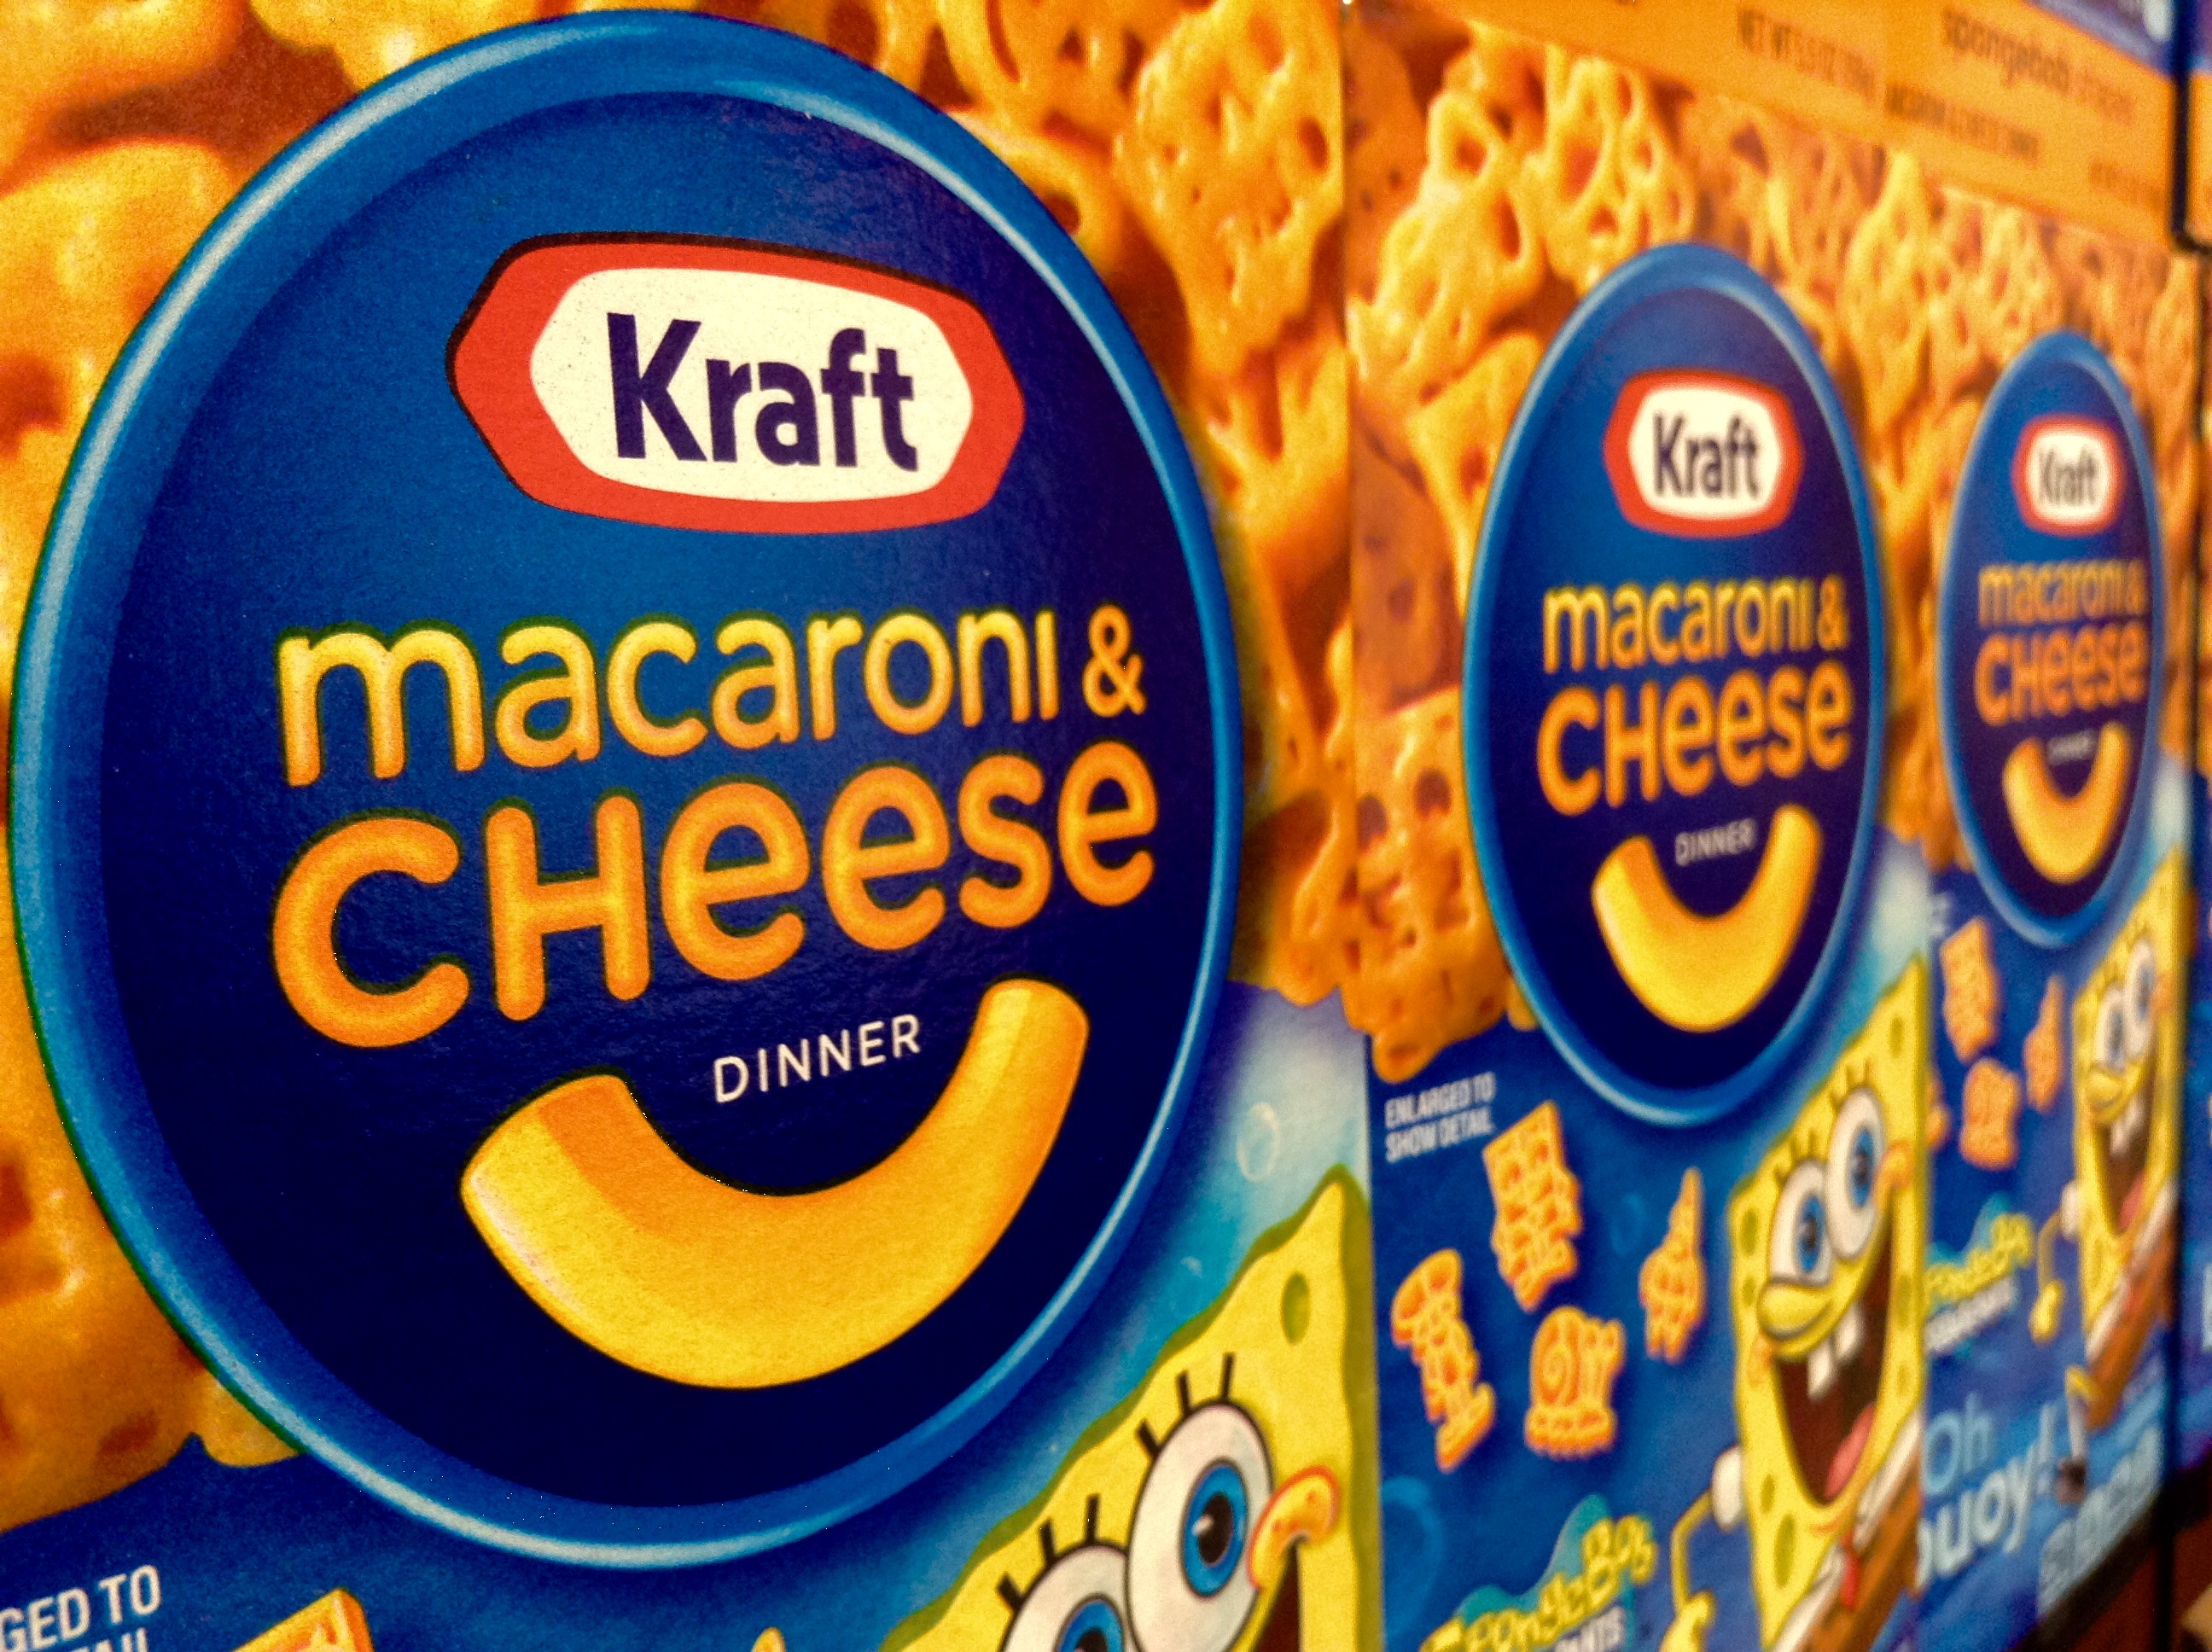 Kraft Macaroni and Cheese display